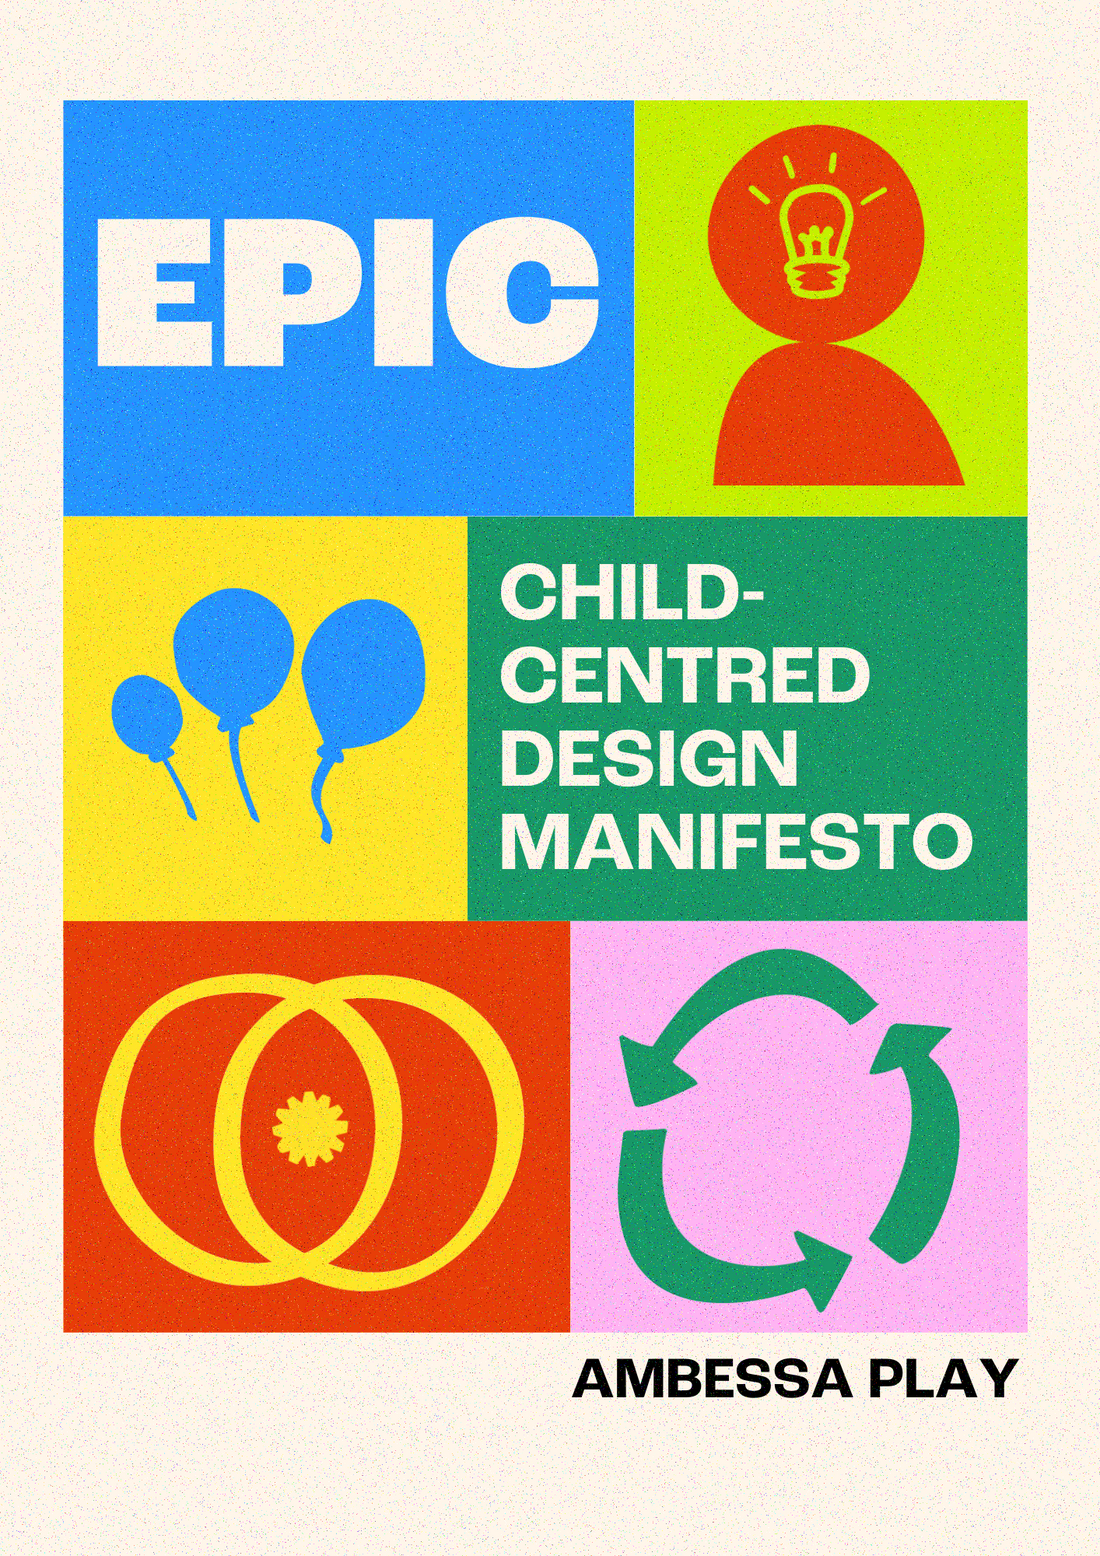 London Design Festival 2022: EPIC Child-Centred Design